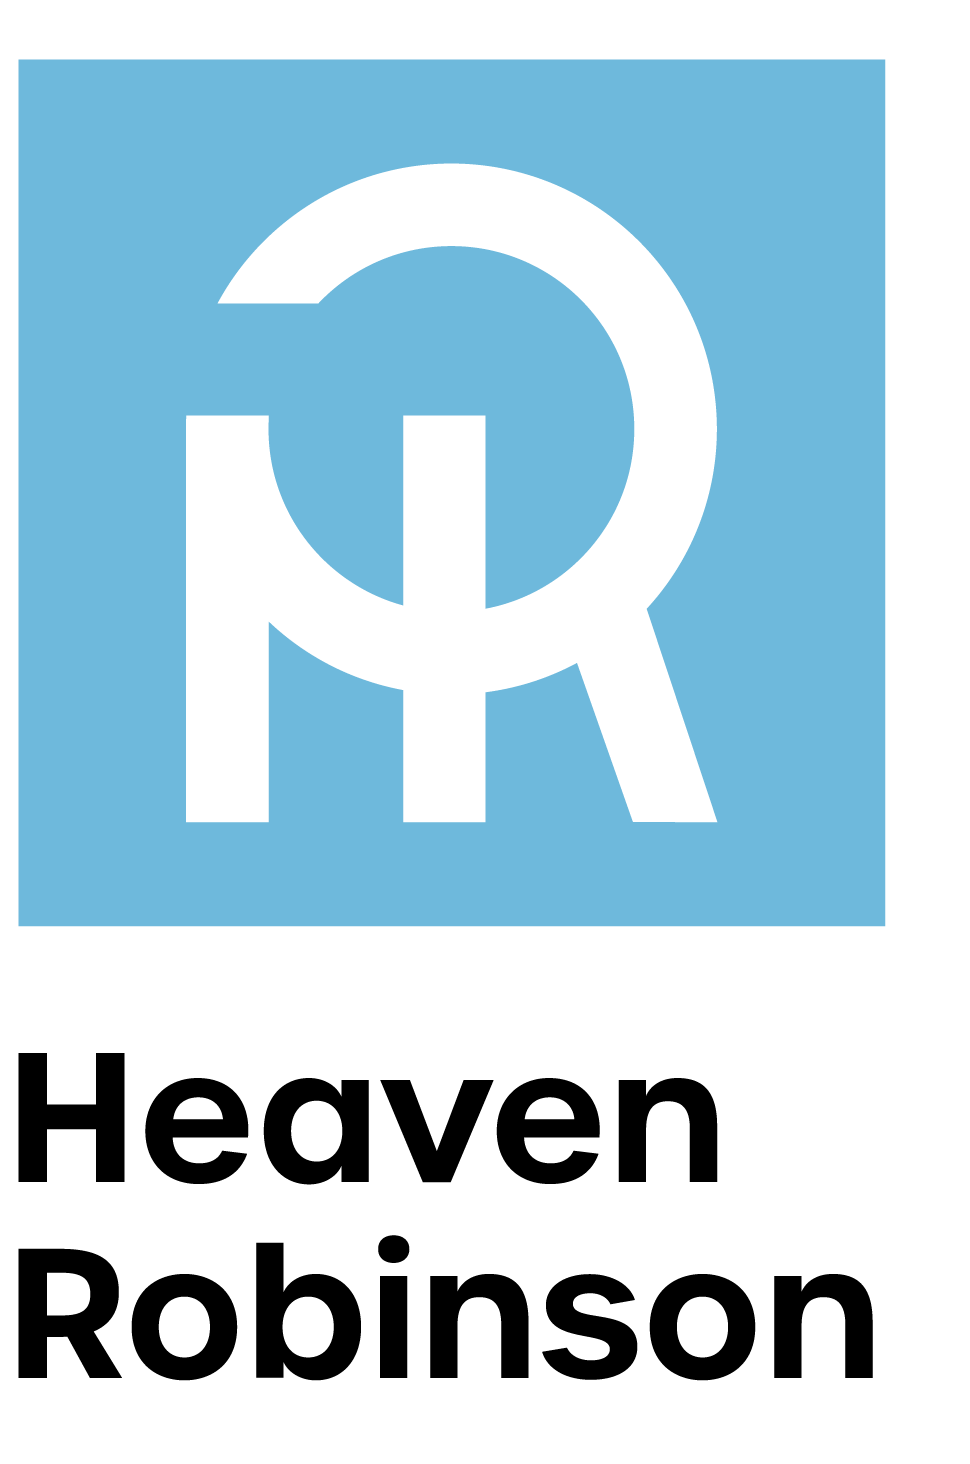 Heaven Robinson